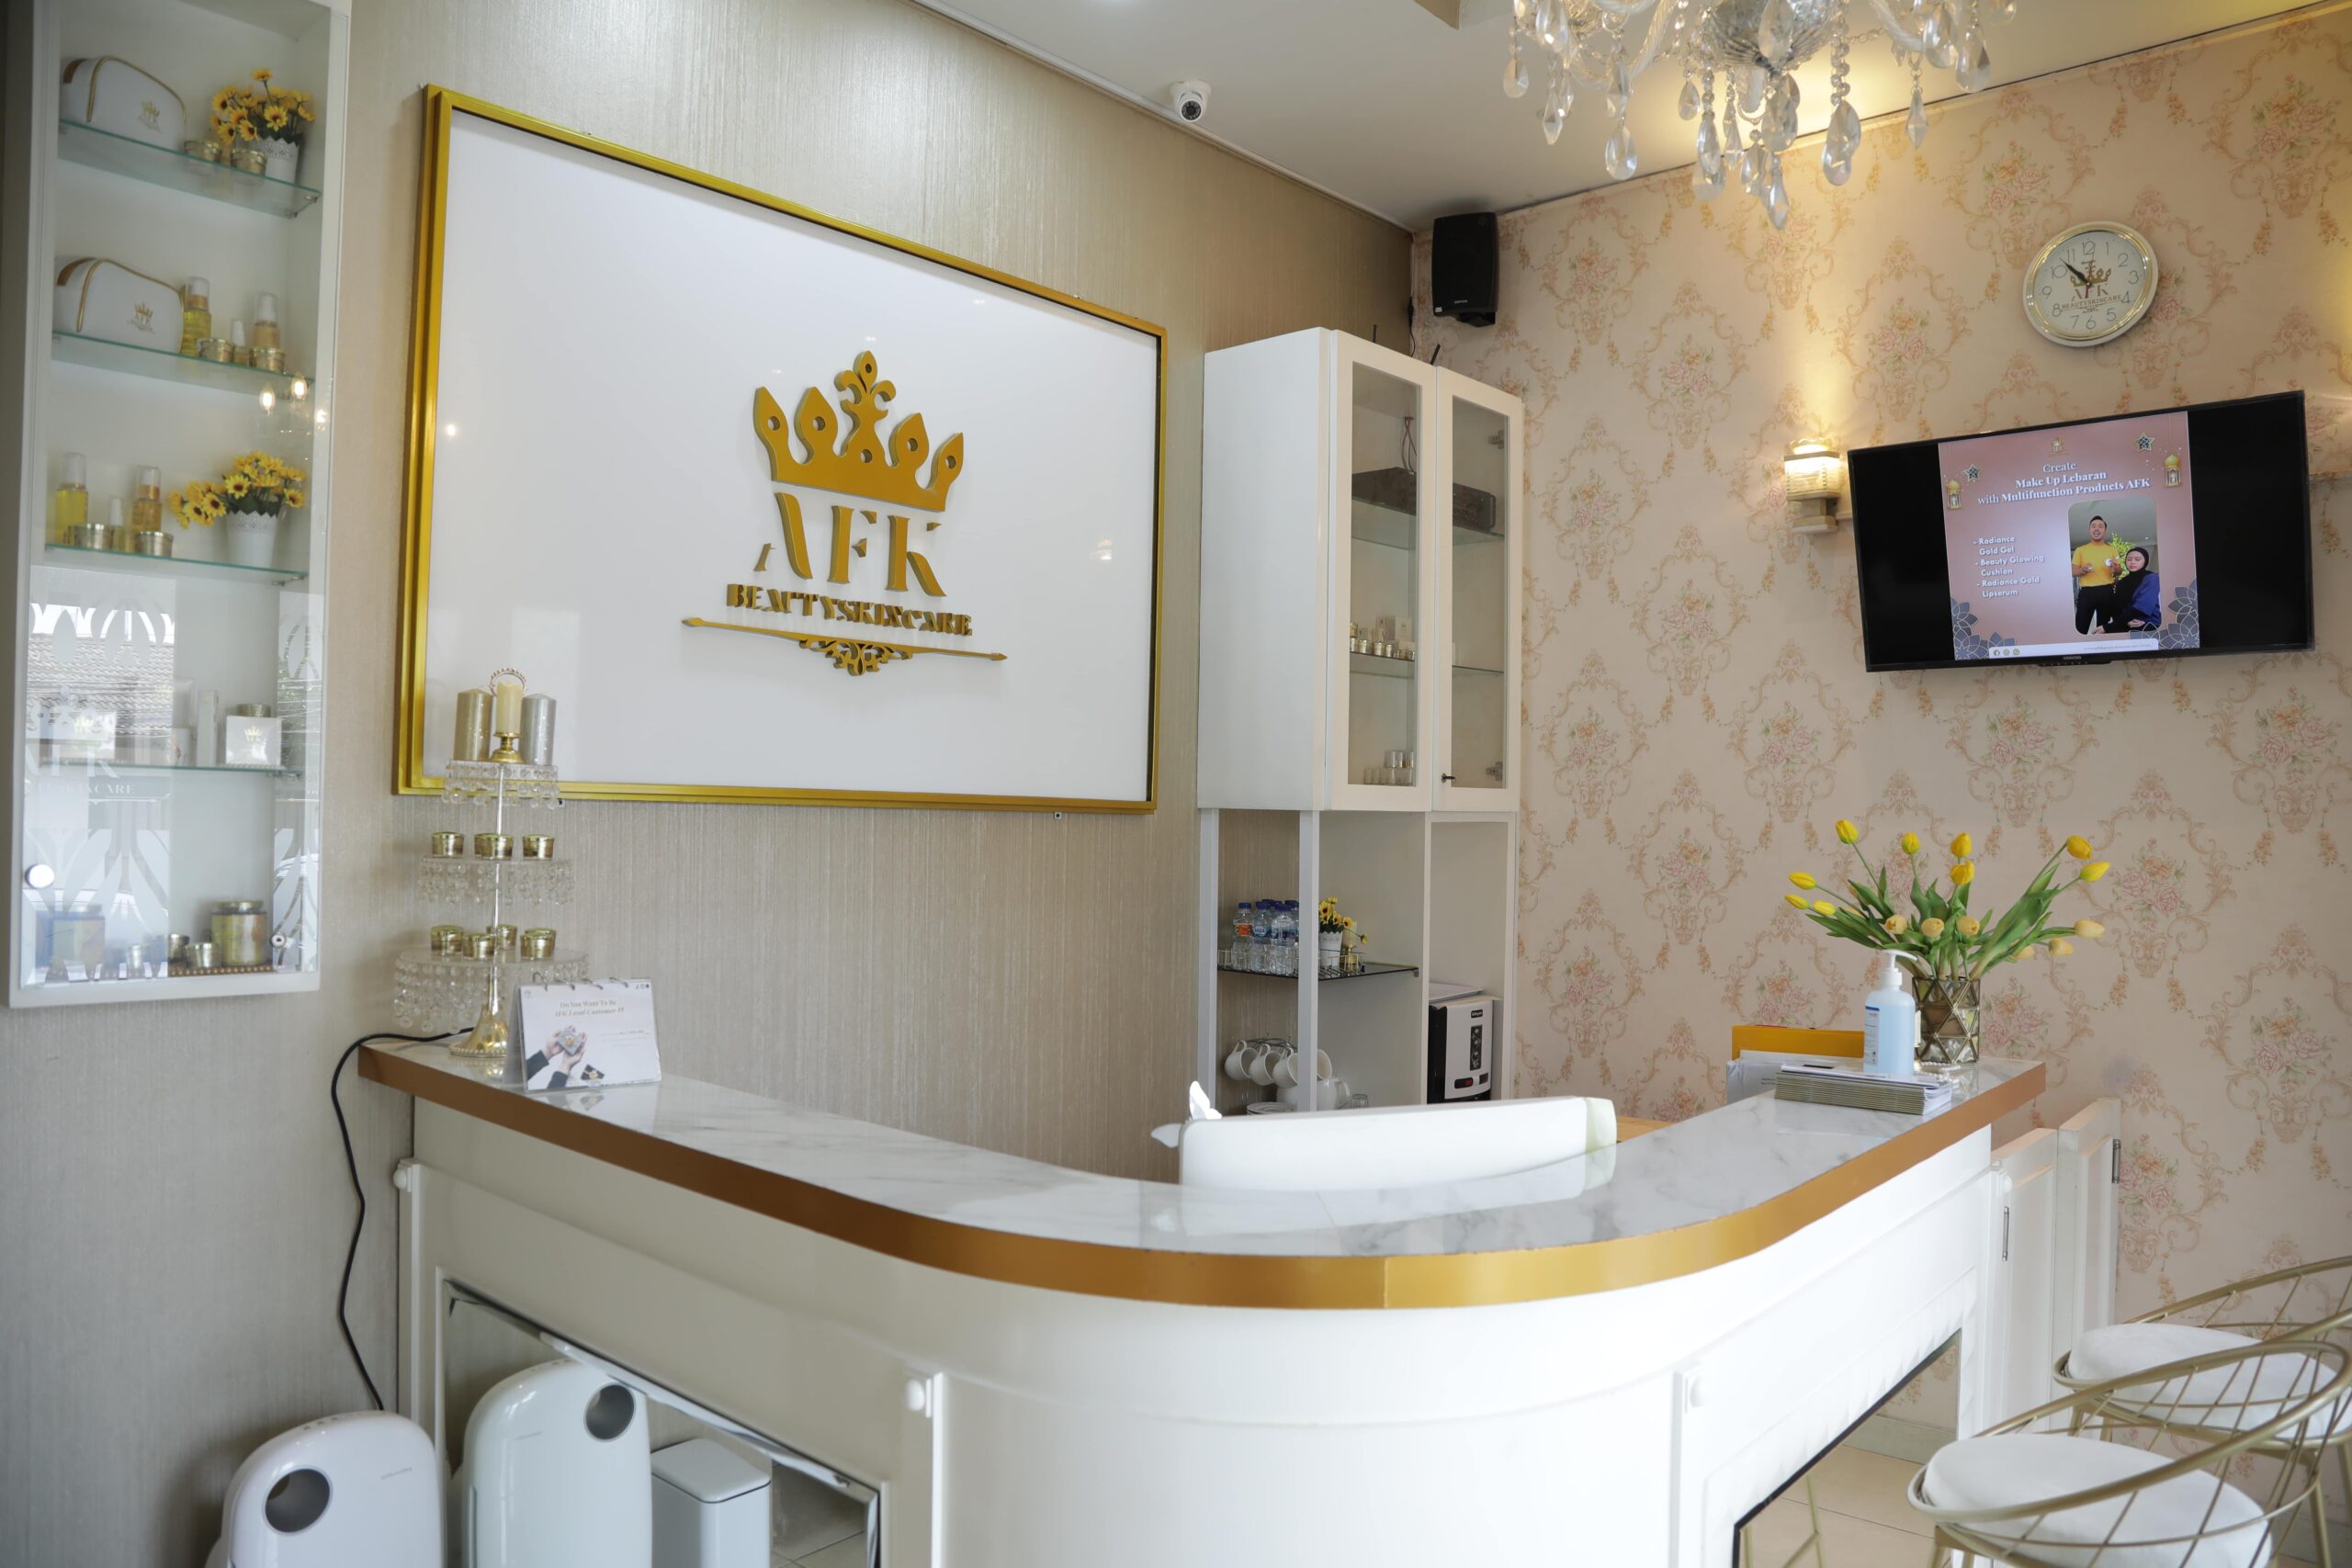 AFK Beauty Skin Clinic